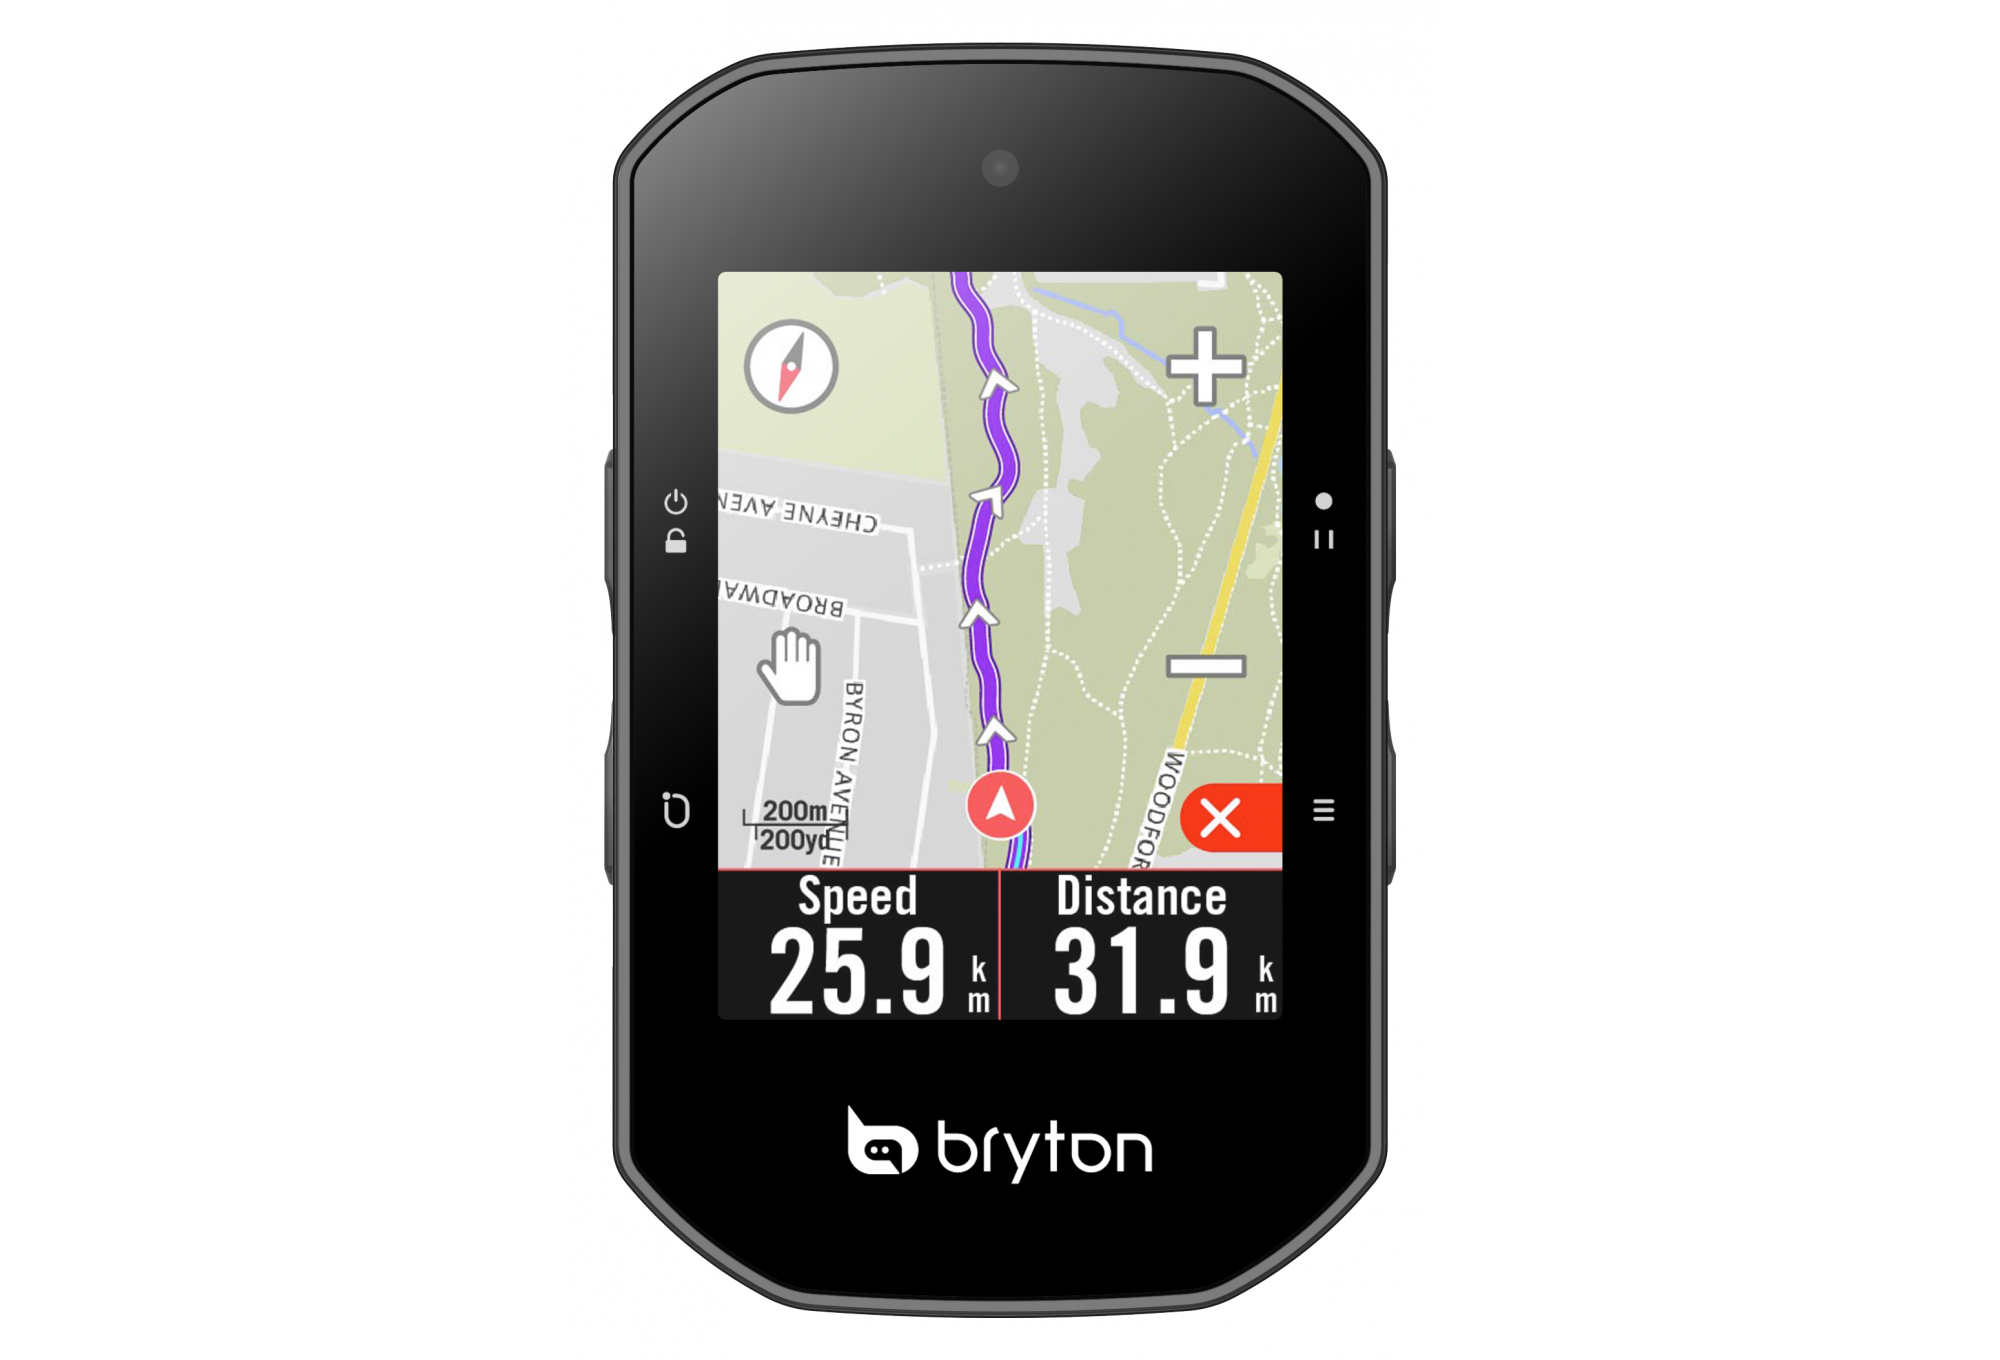 Compteur GPS Sigma Rox 4.0 noir (+ capteur vitesse - cadence